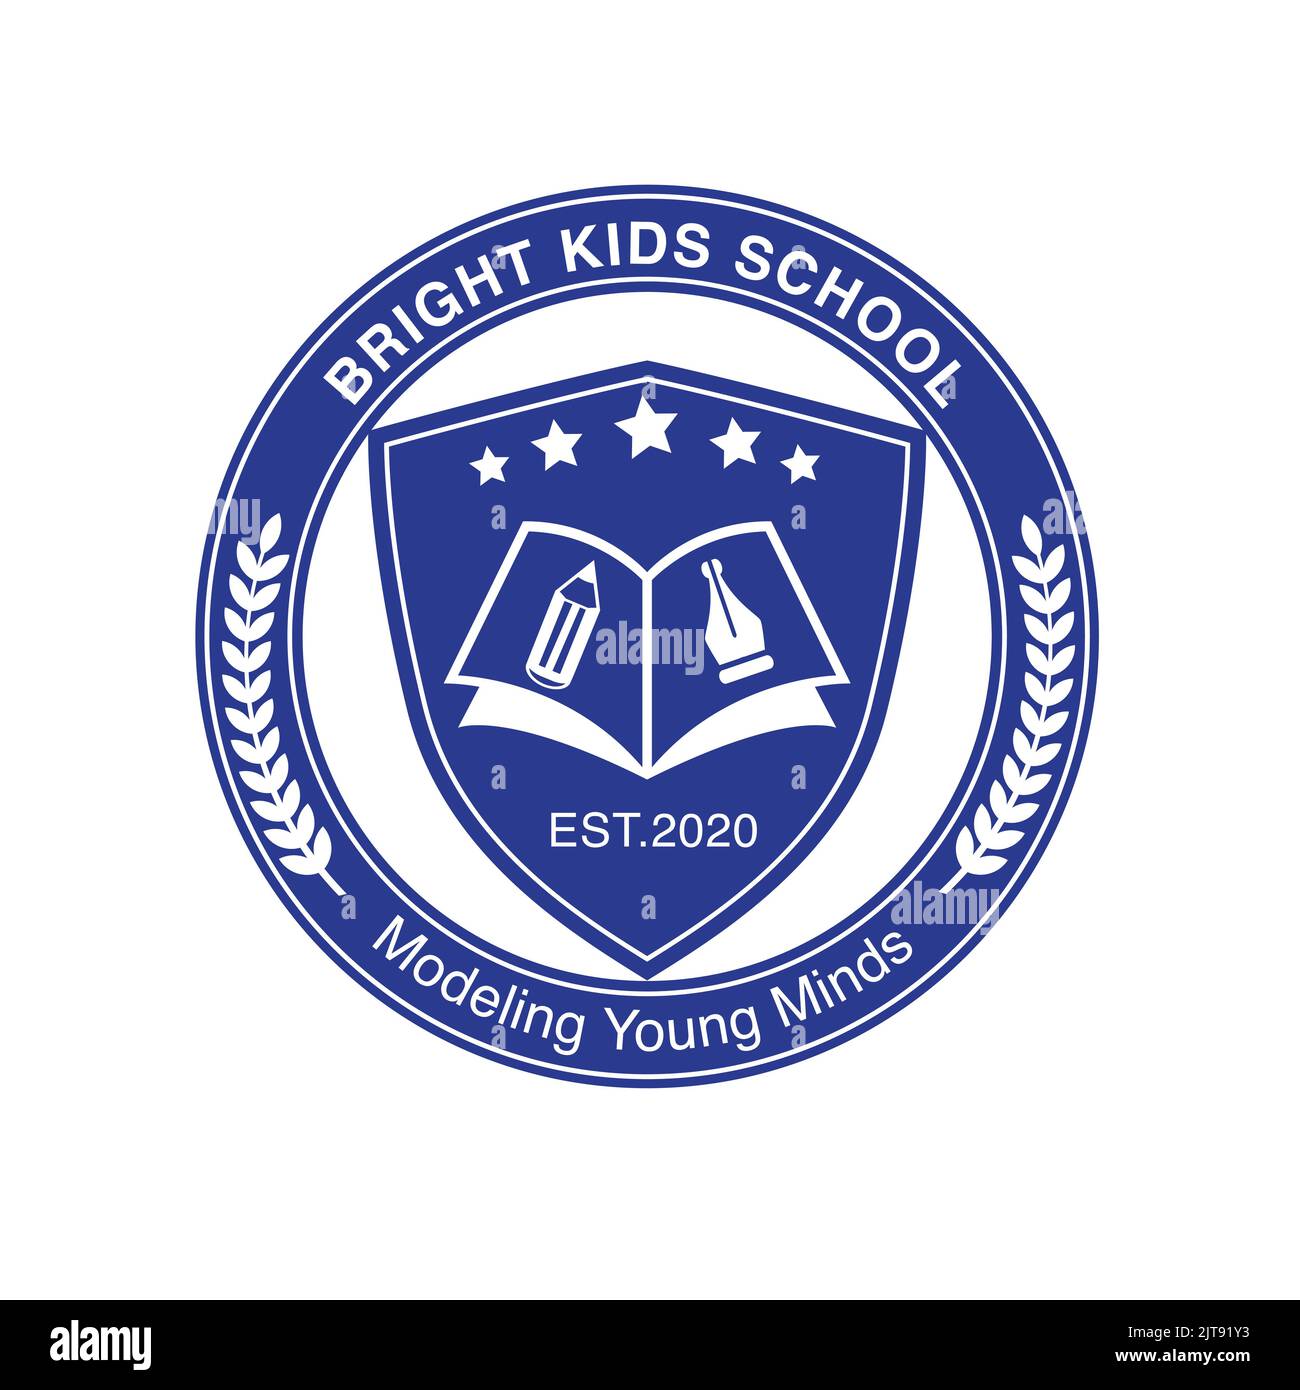 school logo education logo with book pen pencil stars symbols shield and leaves vector logo  illustration Stock Vector